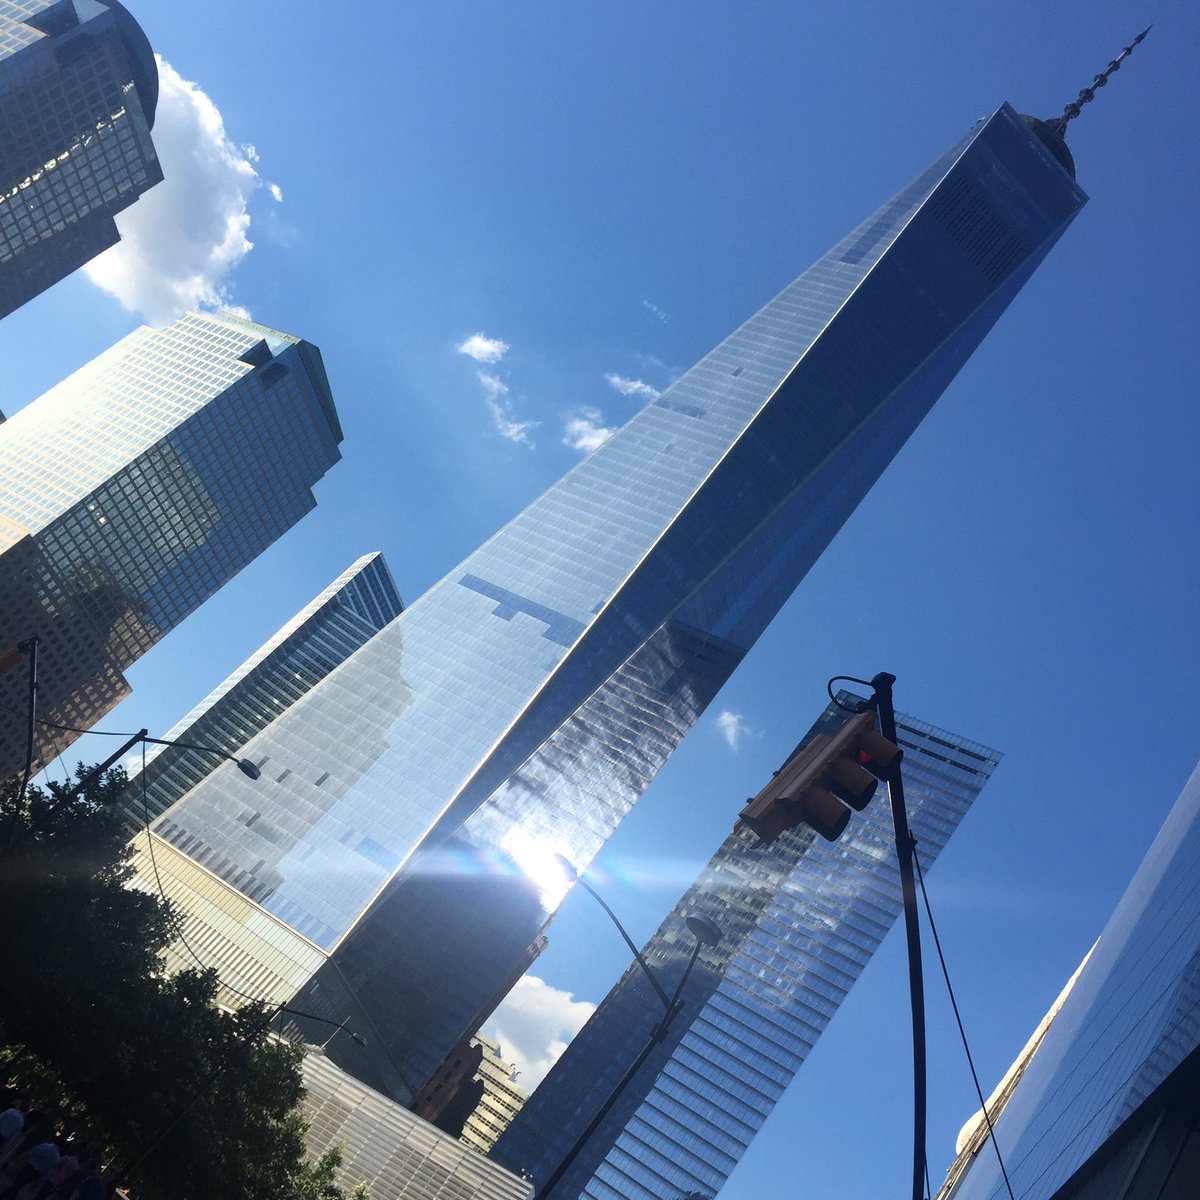 😳😳 #photography #NewYork #newyorkcity #UnitedStates #travel #memorial911 #oneworldobservatory